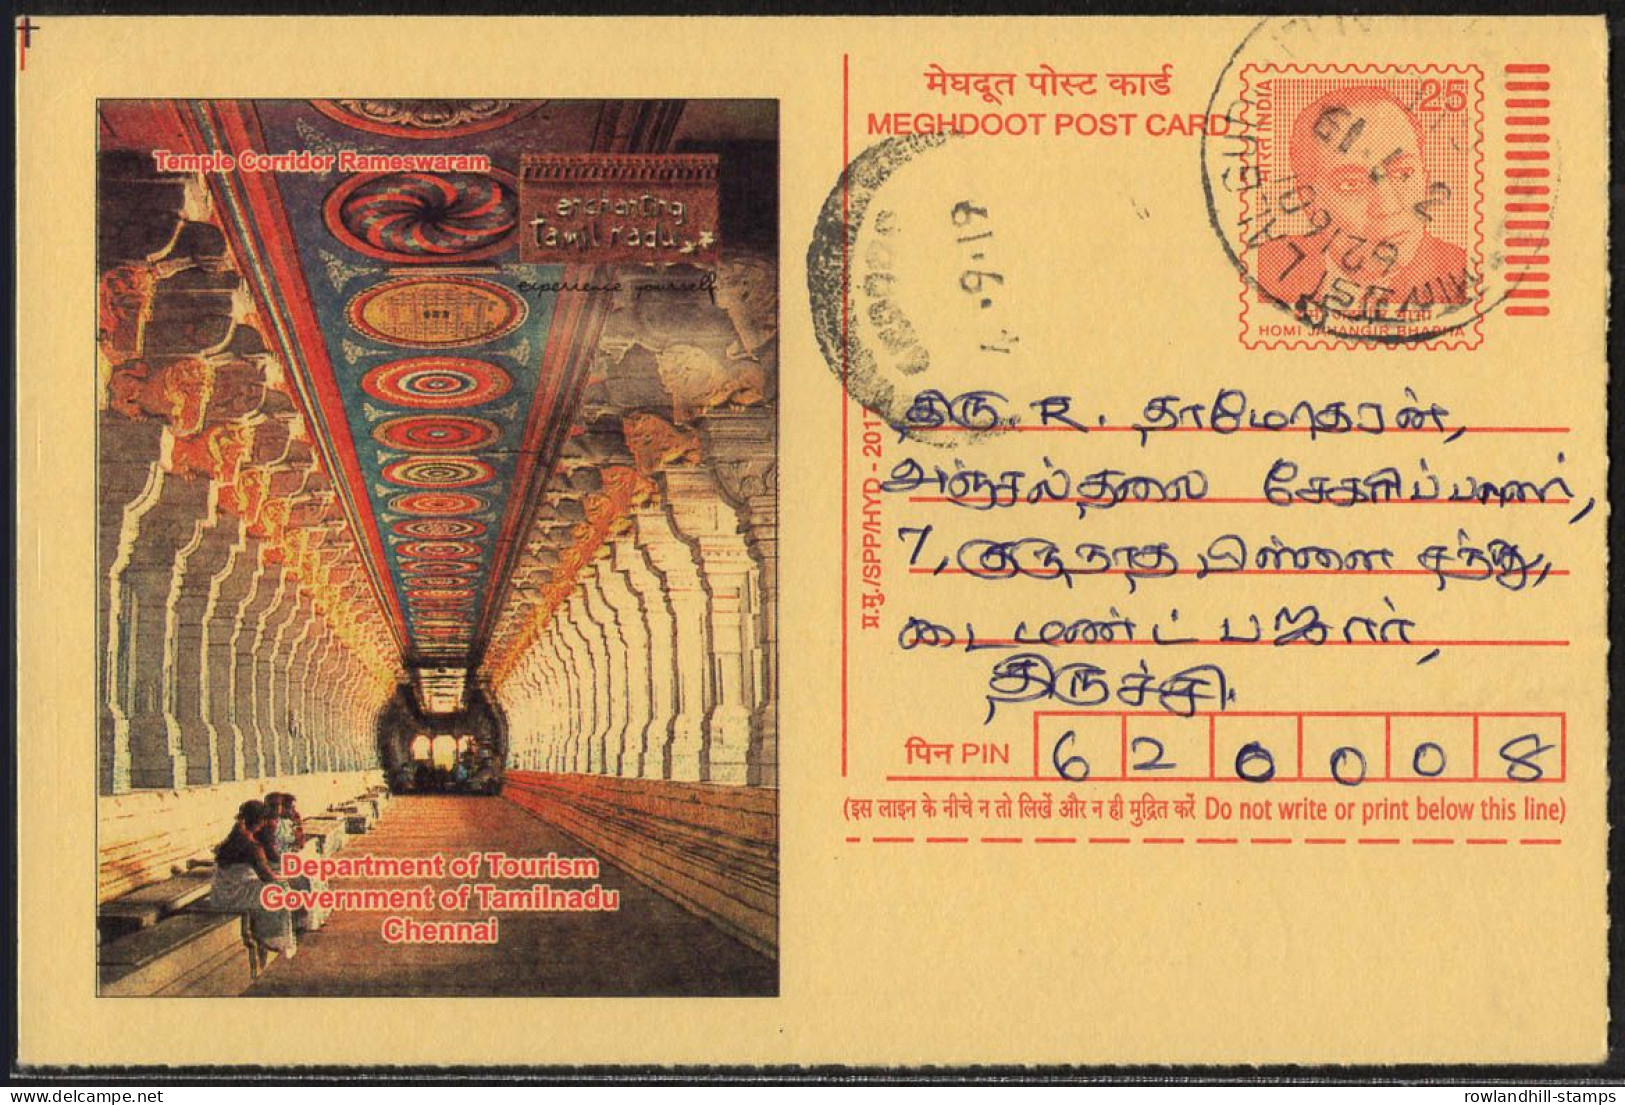 India, 2017, Temple Corridor RAMESWARAM, Meghdoot Post Card, Hinduism, Tourism, Tamilnadu, Architecture, Religion, A23 - Hindoeïsme